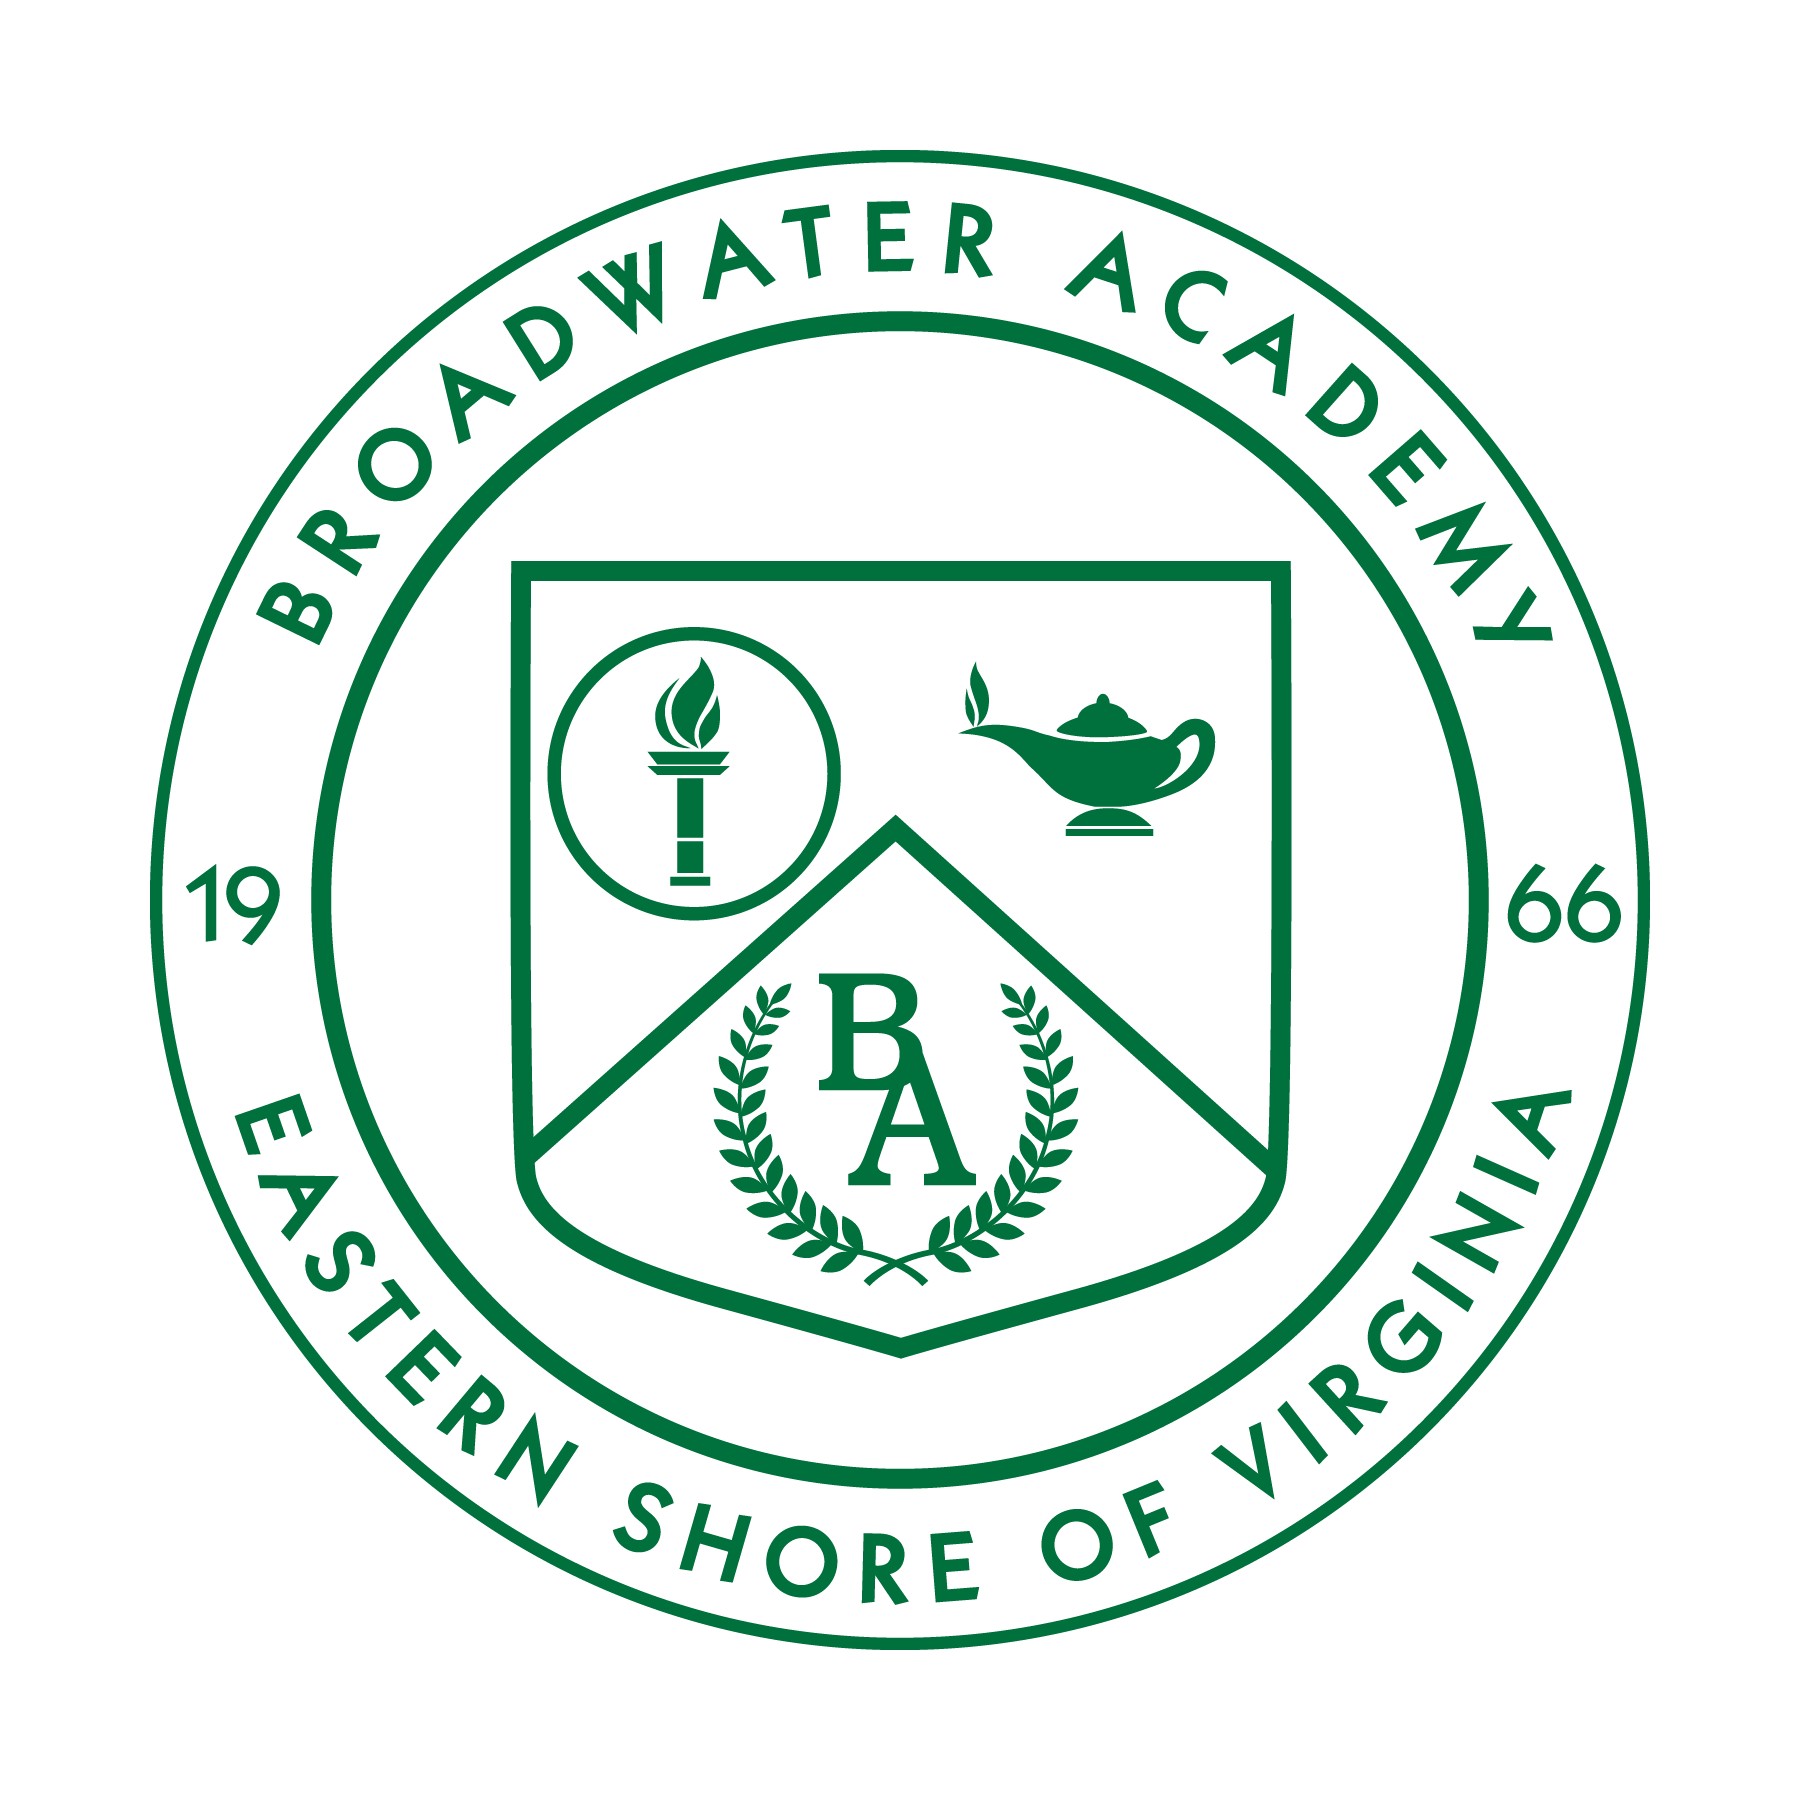 Broadwater Academy